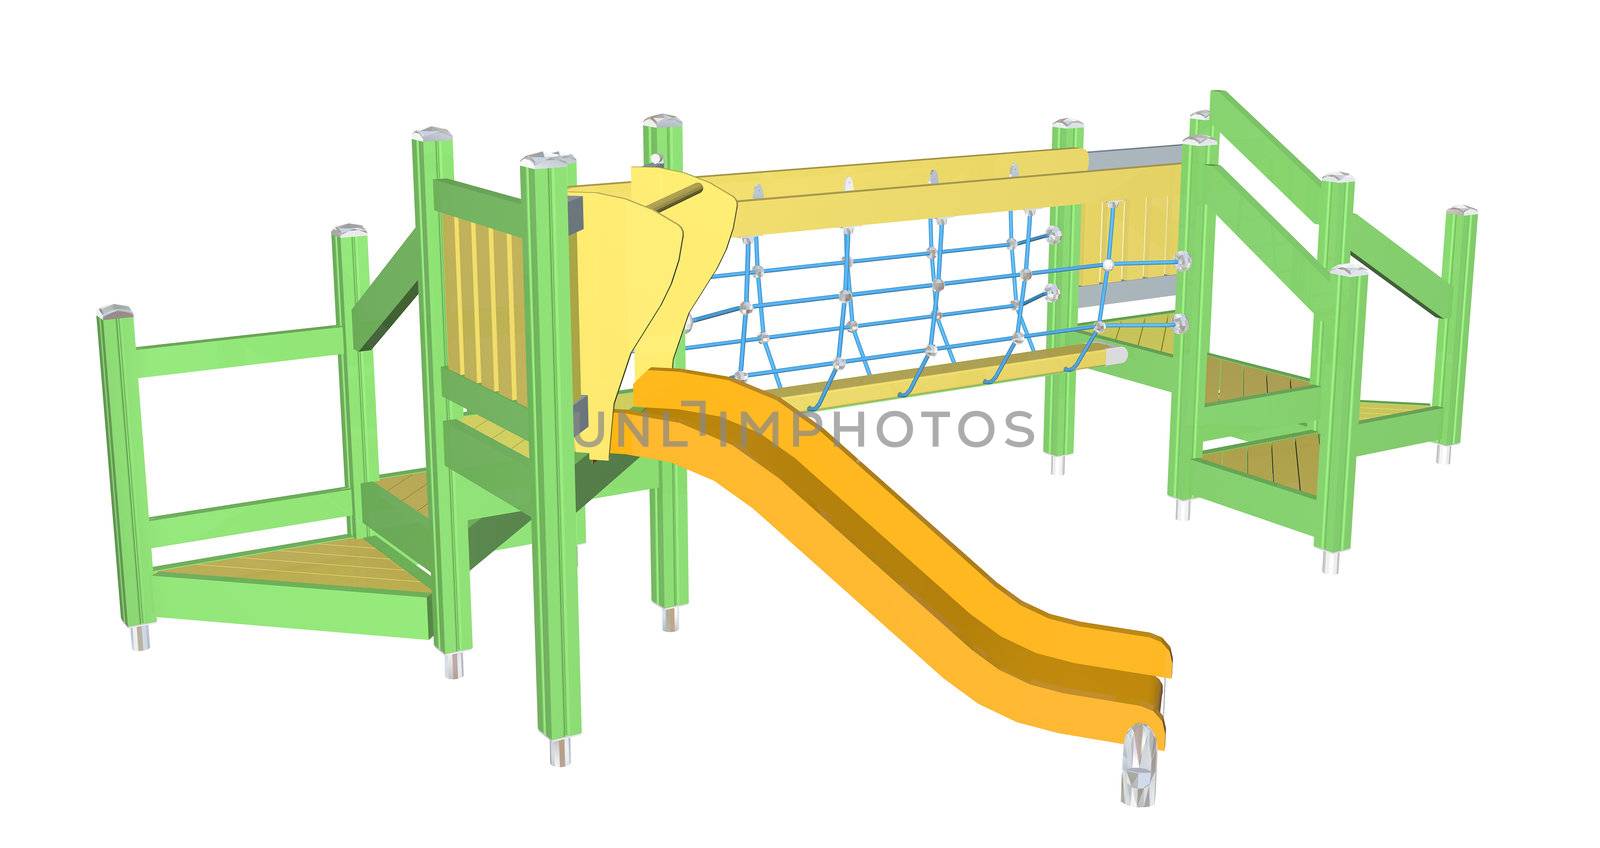 Kiddie Slide and Crawling Net, 3D illustration by Morphart